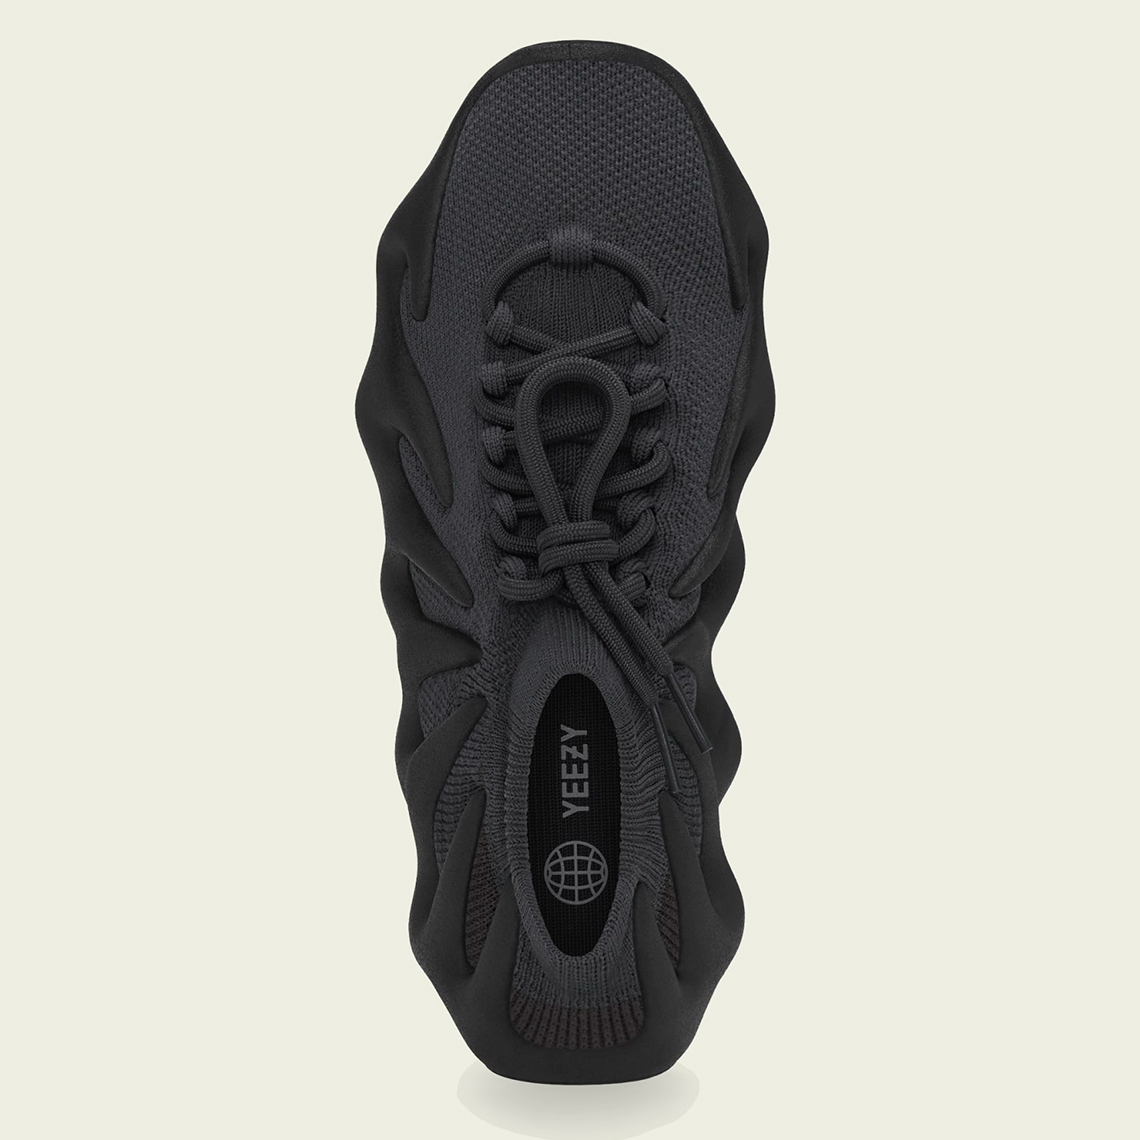 The adidas Yeezy 450 âUtility Blackâ Releases On August 2nd | LaptrinhX / News